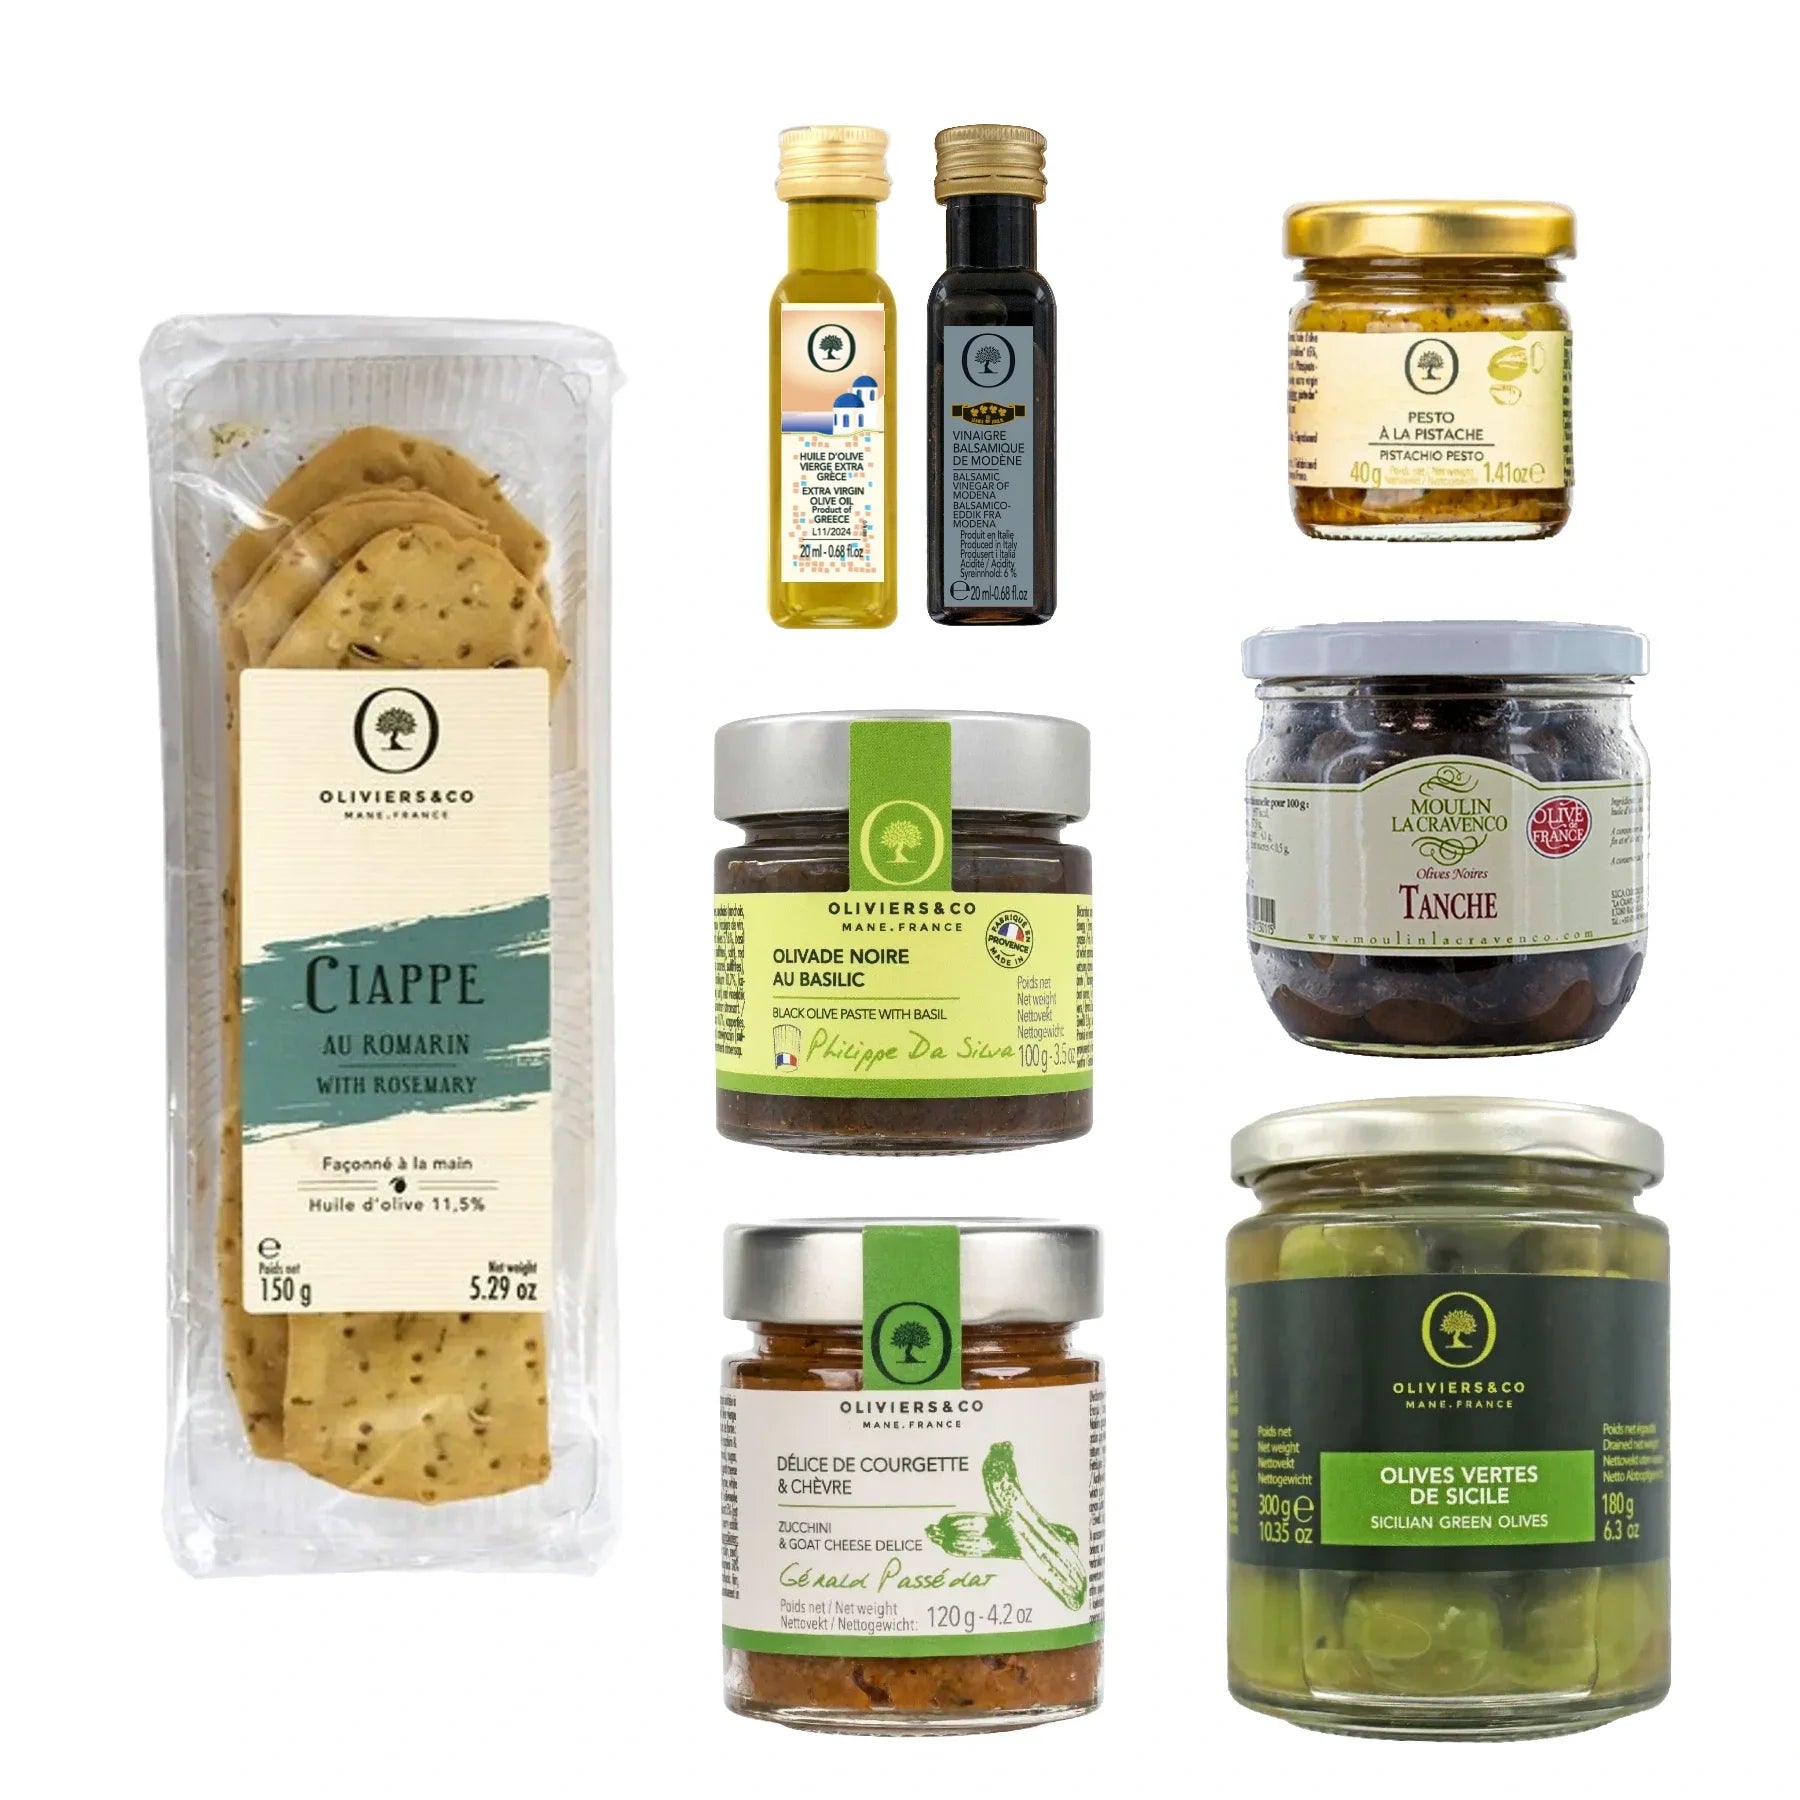 Tapas delikatesser, den eksklusive, kit med kiks, pesto, tapenade, delice, 2 slags oliven, olivenolie og balsamico fra Oliviers & Co